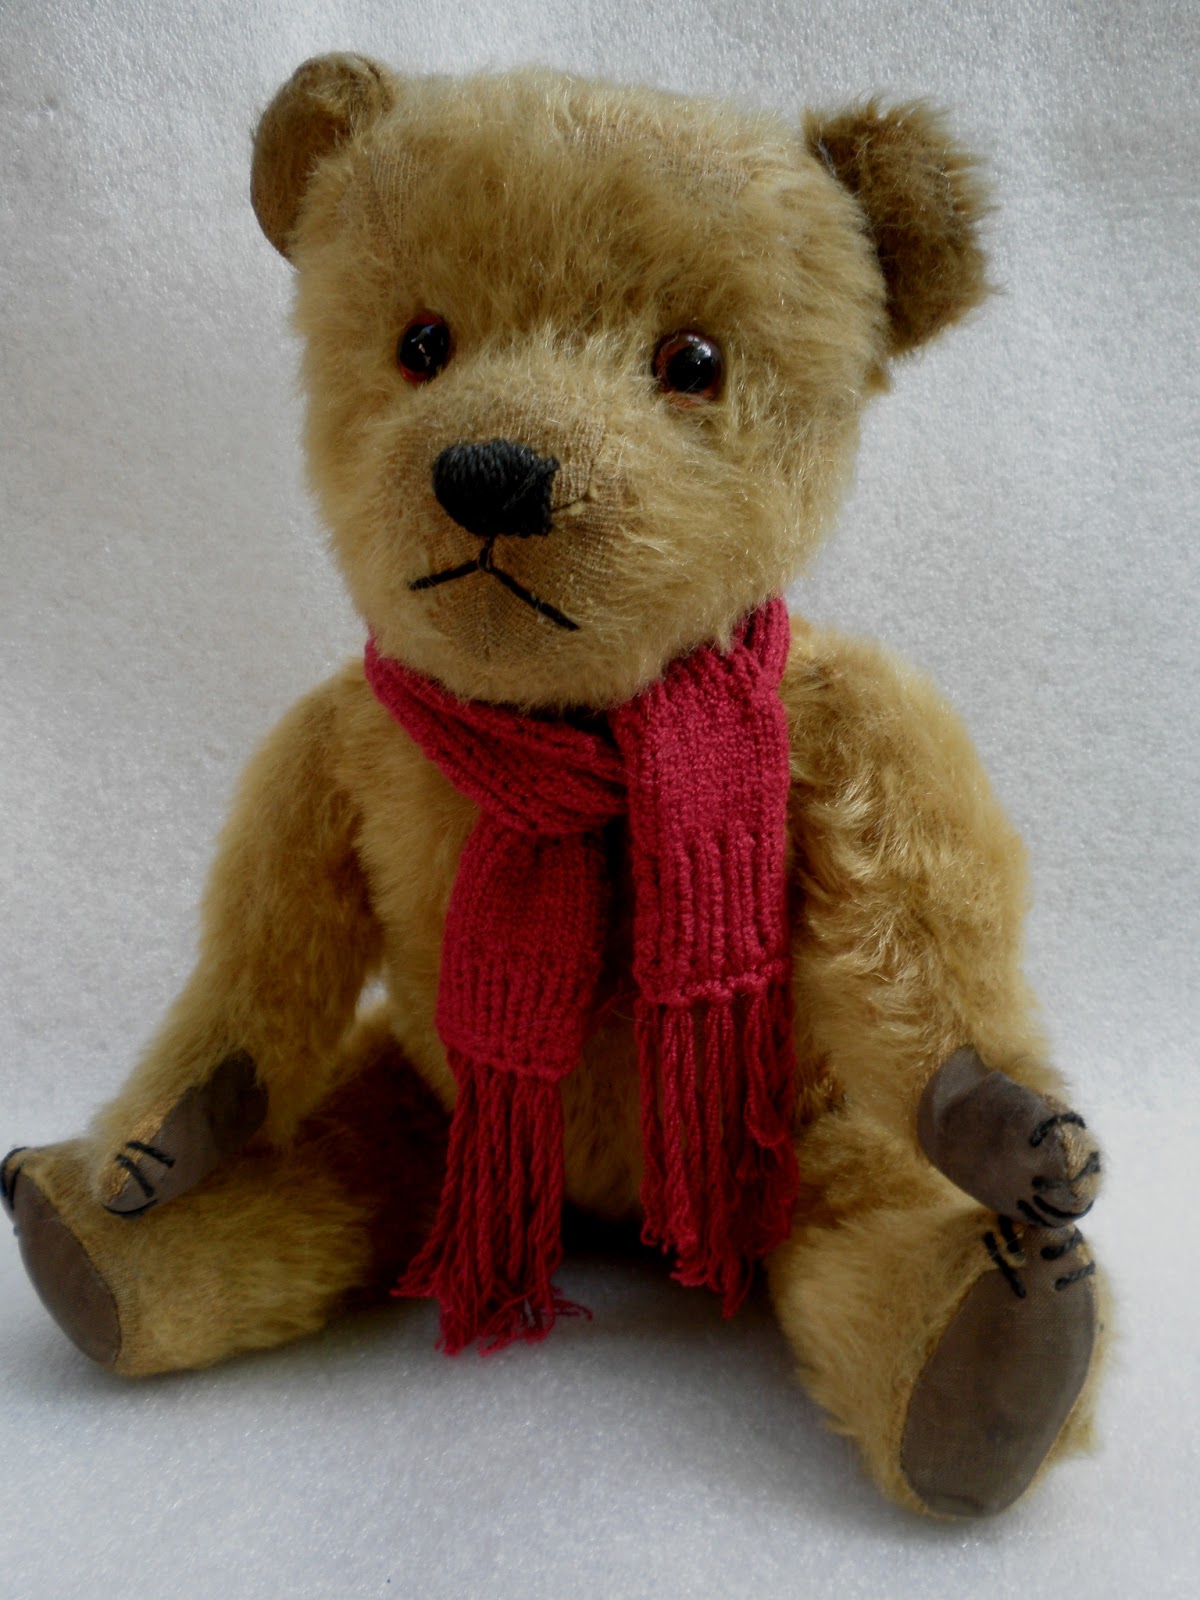 Mandicrafts News & Views - Teddy Bears & Collectibles: Collectible Teddy  Bears - How to Determine if your Find is Antique or Vintage